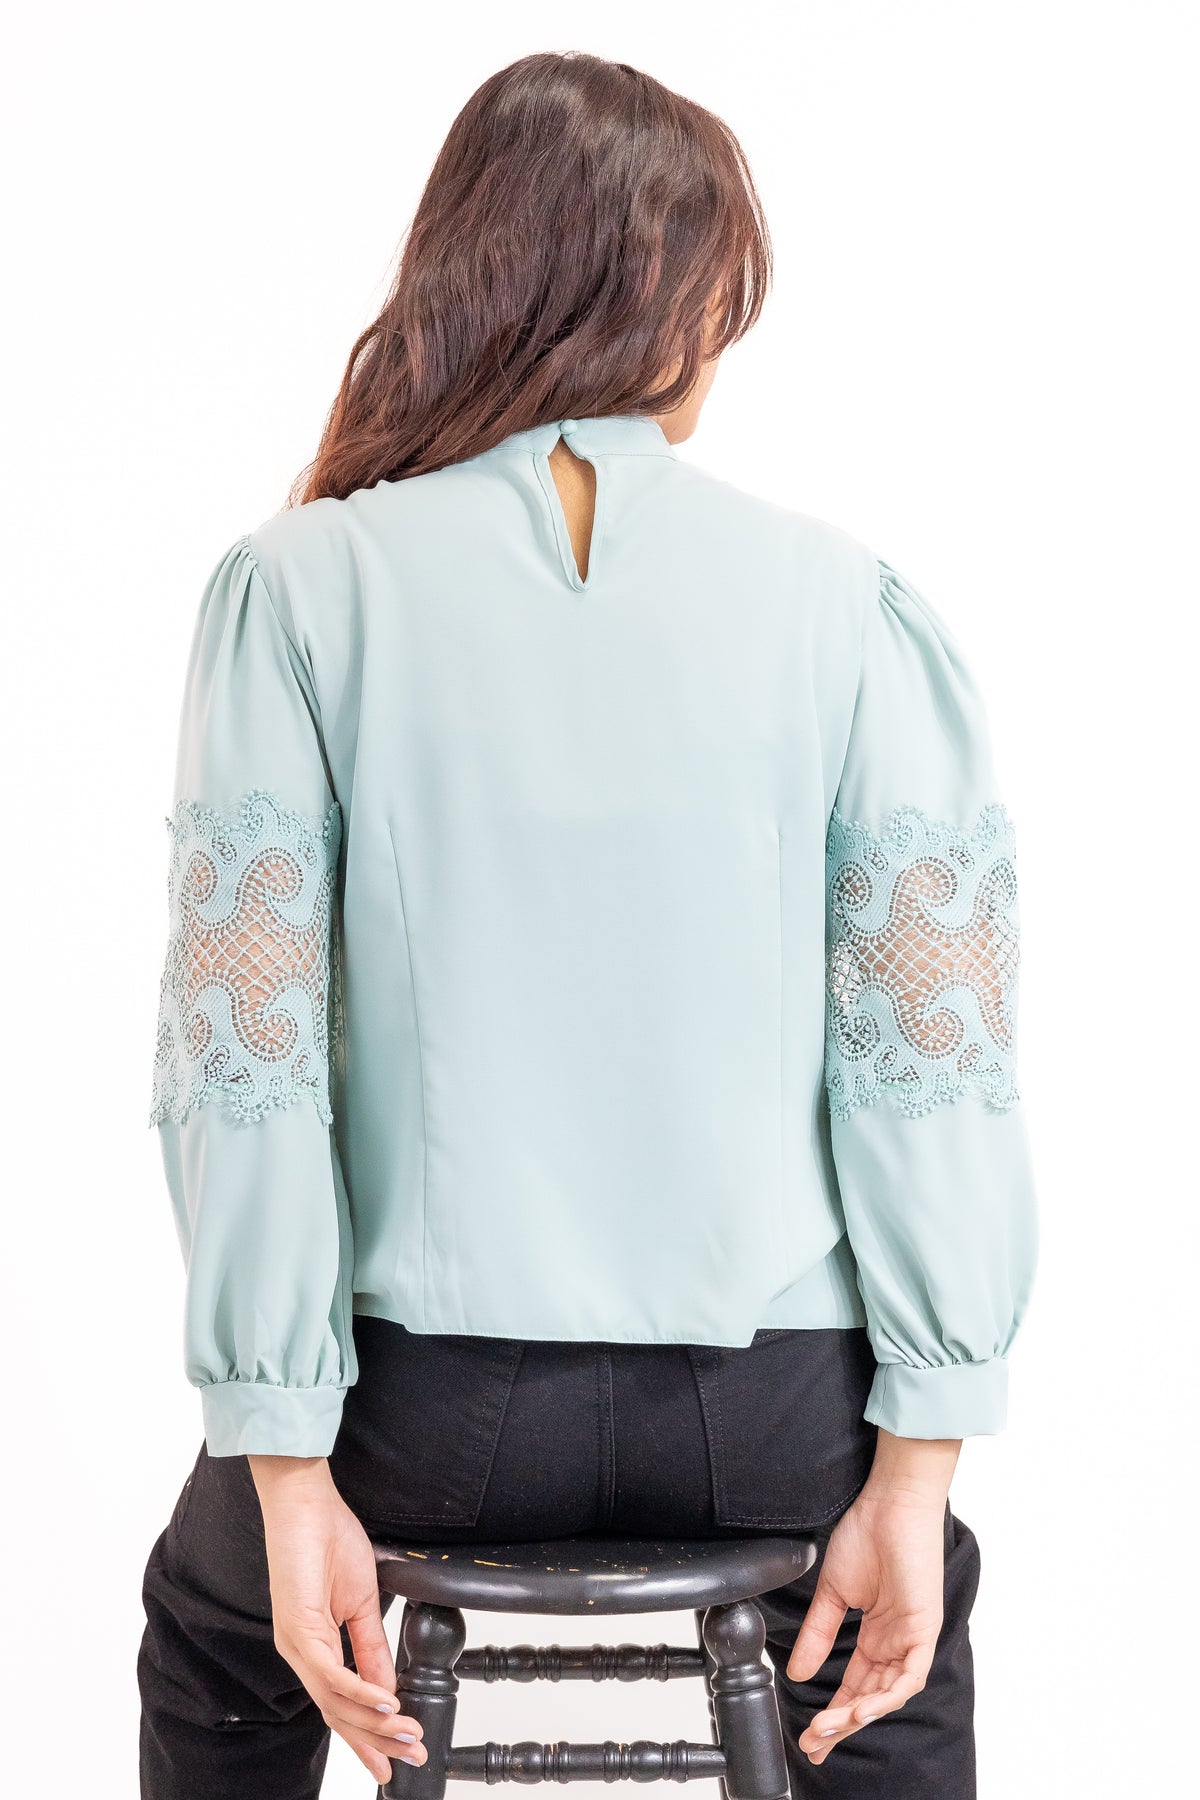 Mint Green Crochet Lace blouse